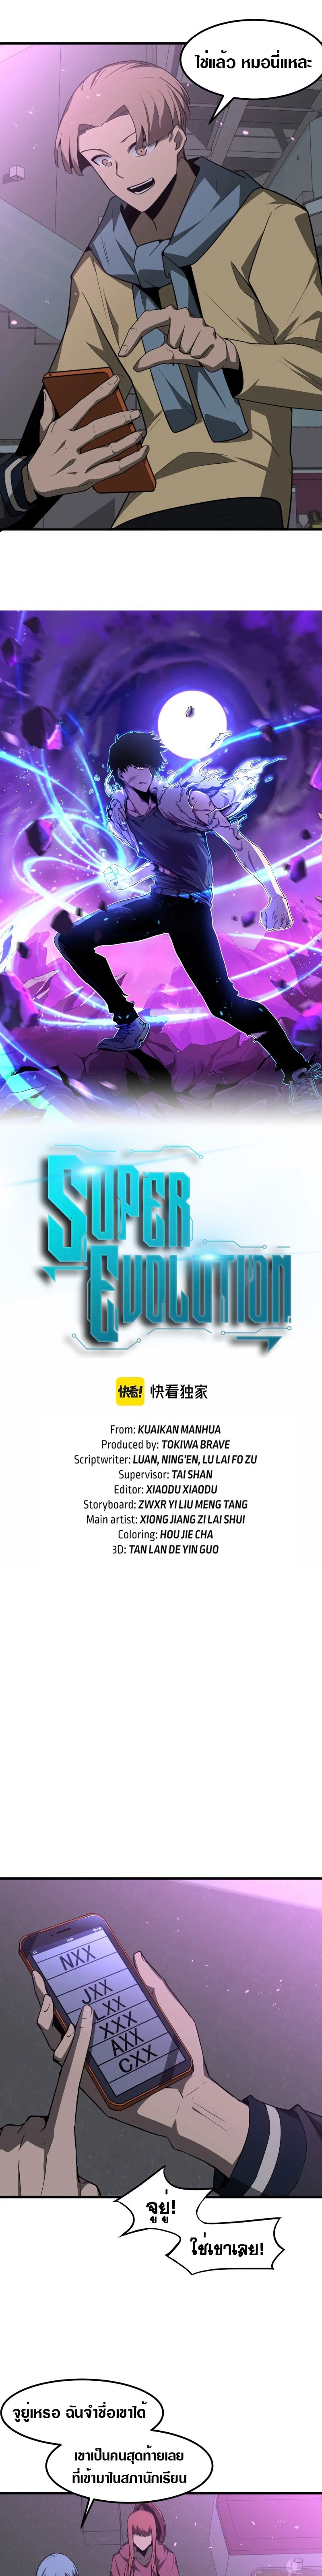 Super Evolution 71.01